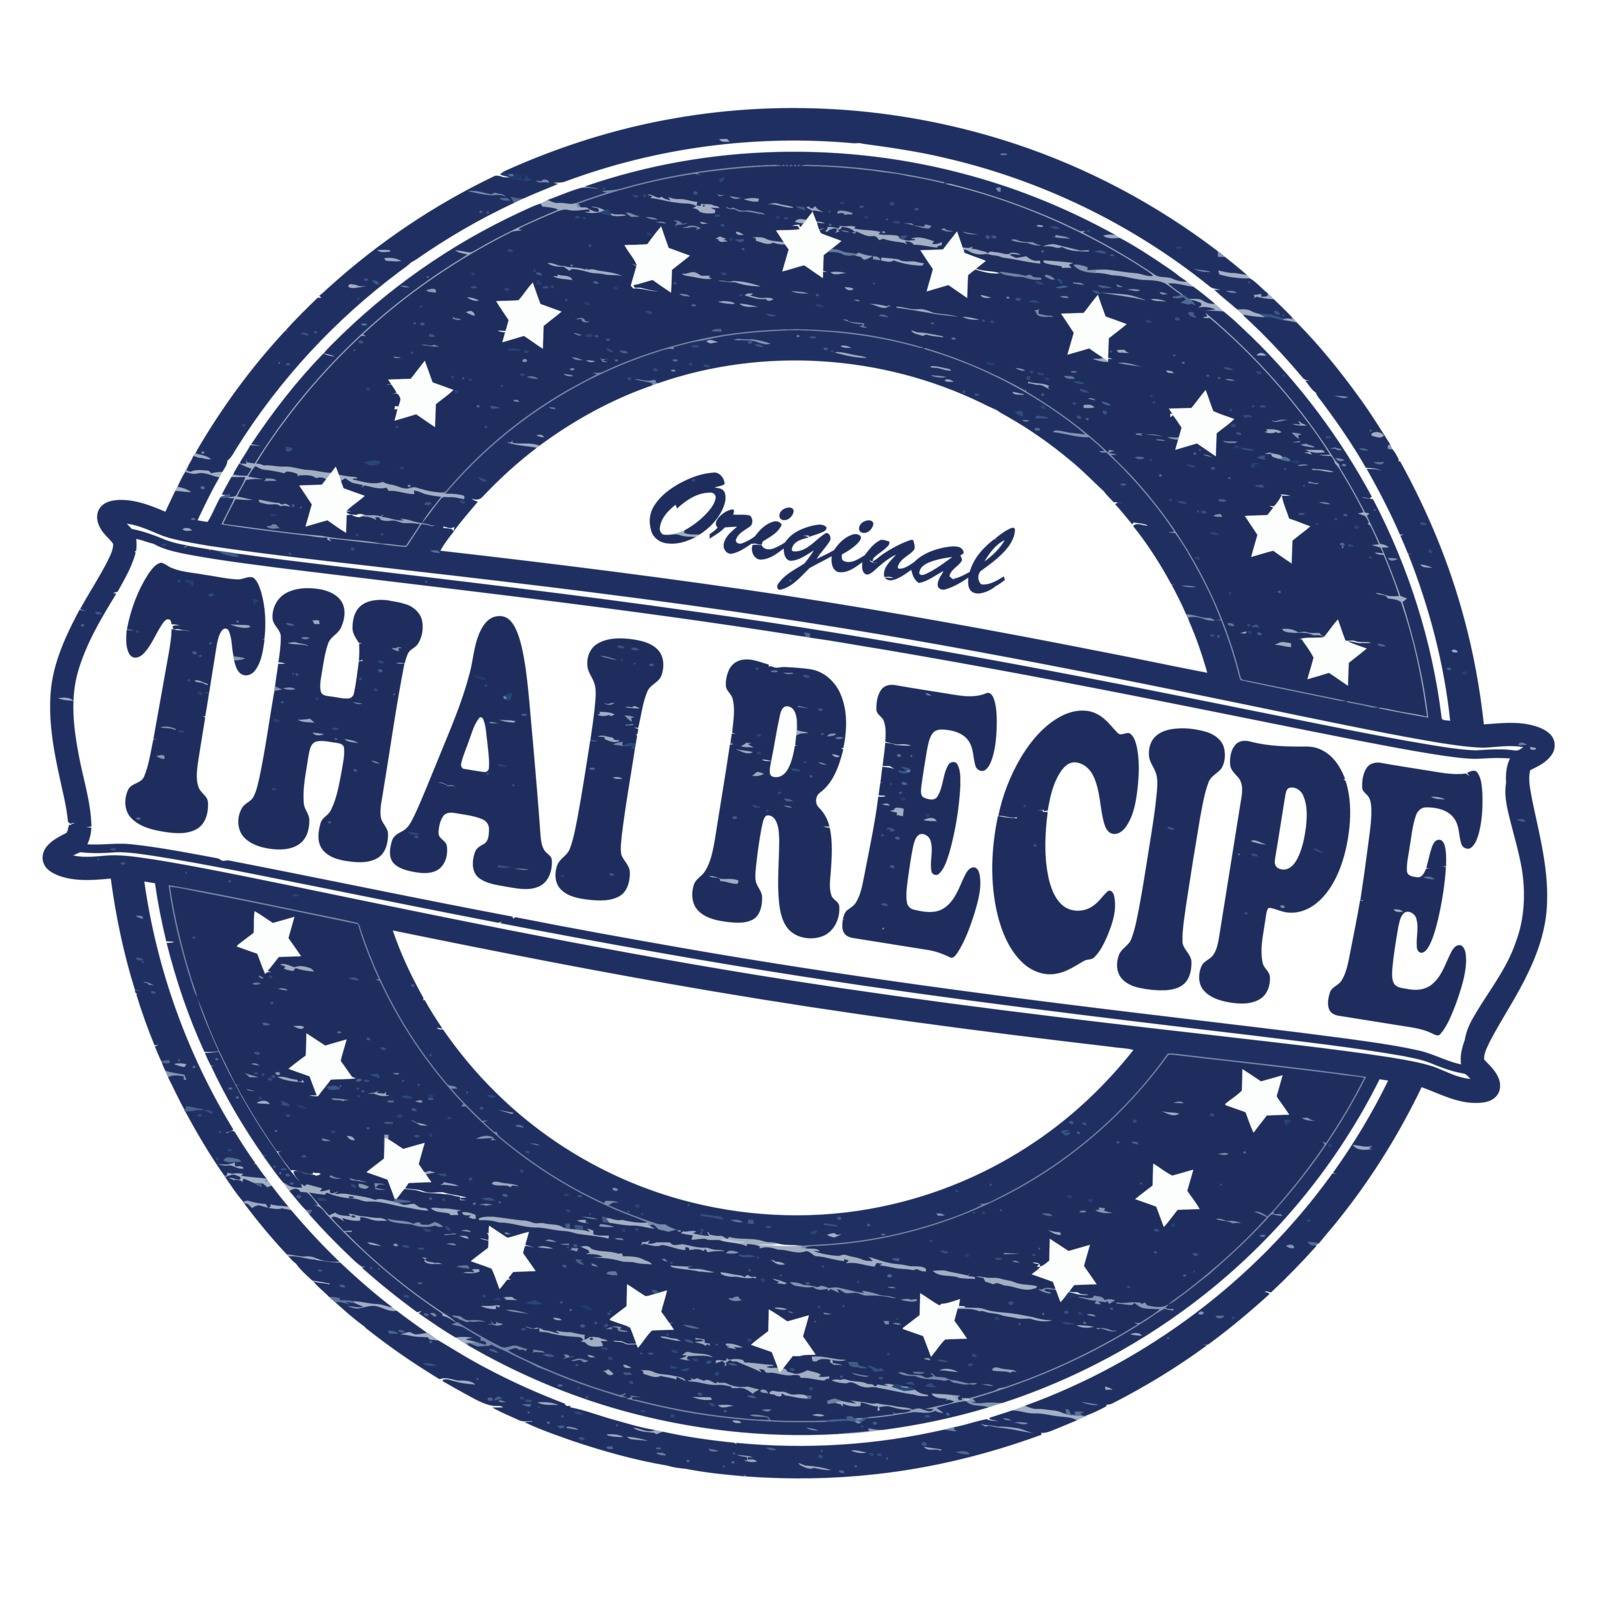 Original Thai recipe by carmenbobo